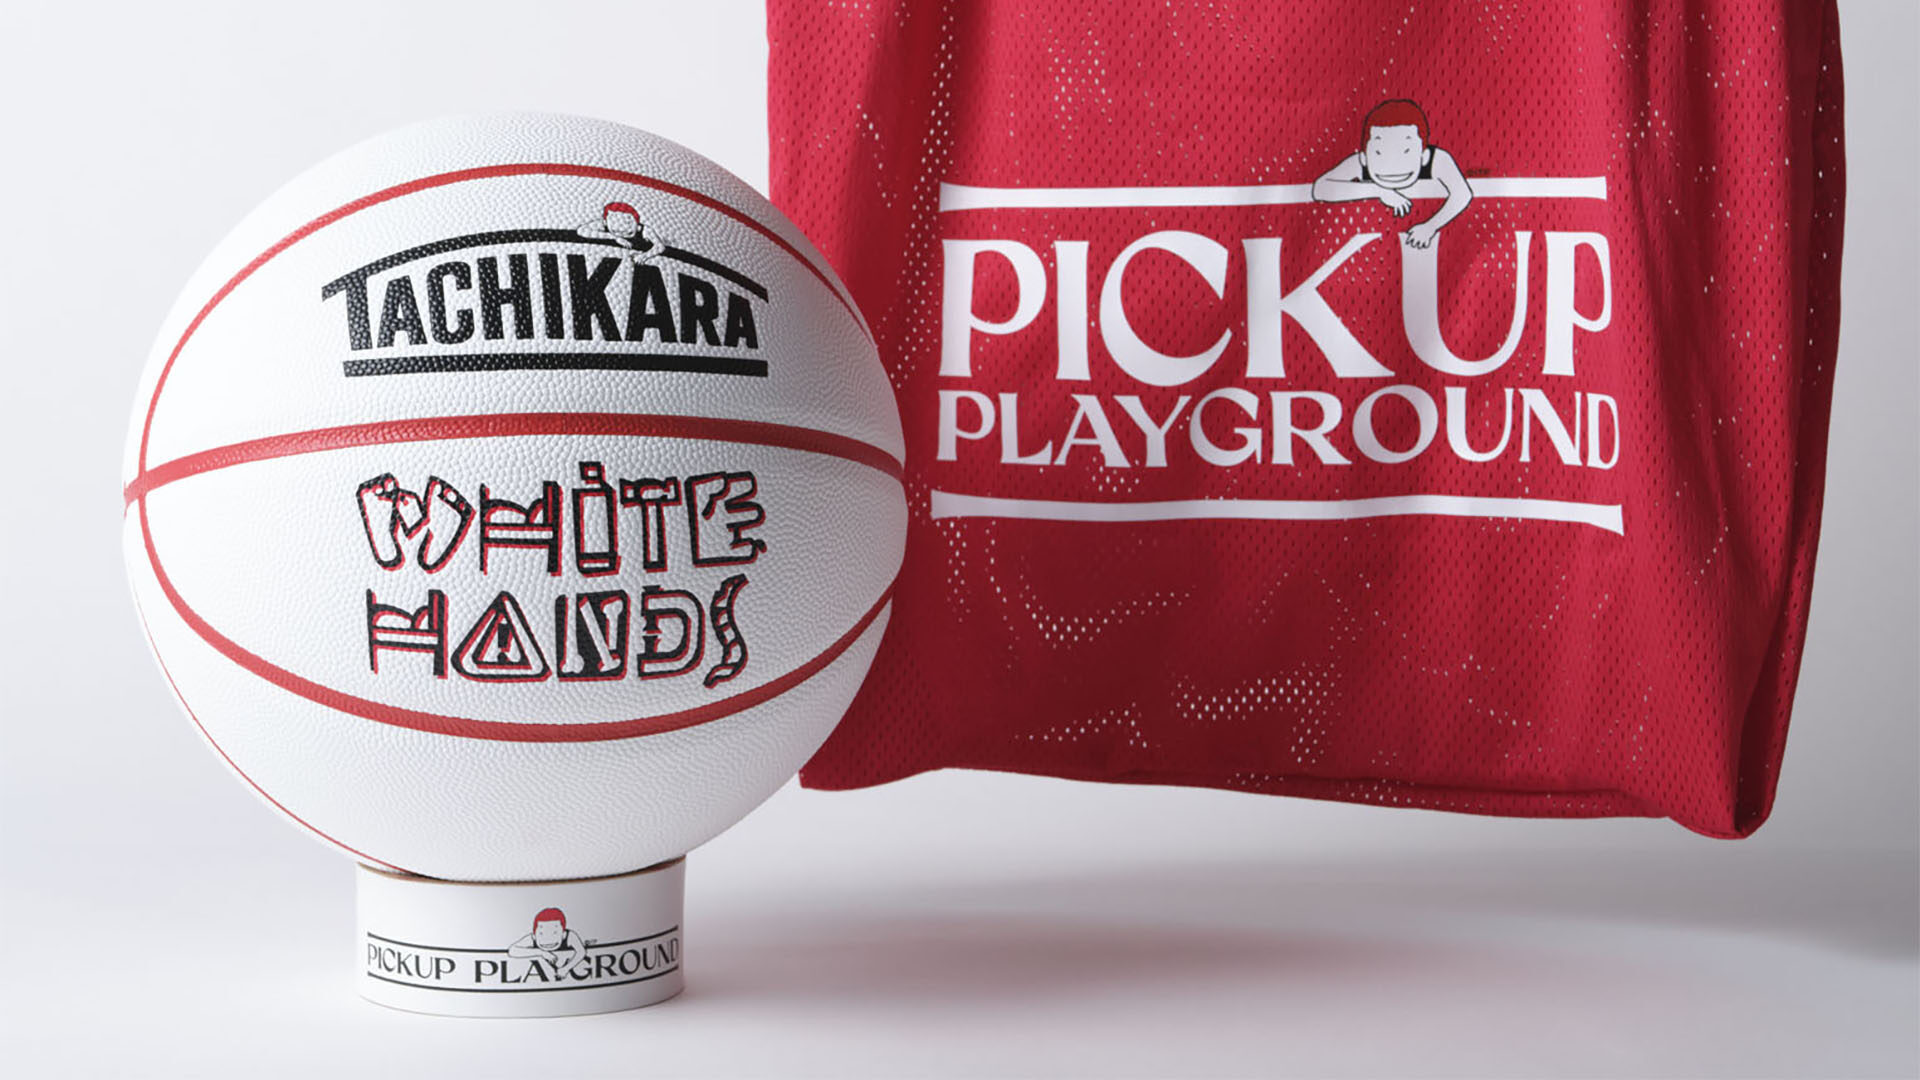 TACHIKARAが「PICK UP PLAYGROUND」アイテムを2月7日(月)より再販売！ ｜ FLY BASKETBALL CULTURE  MAGAZINE ｜ バスケットボール ファッション・カルチャー マガジン